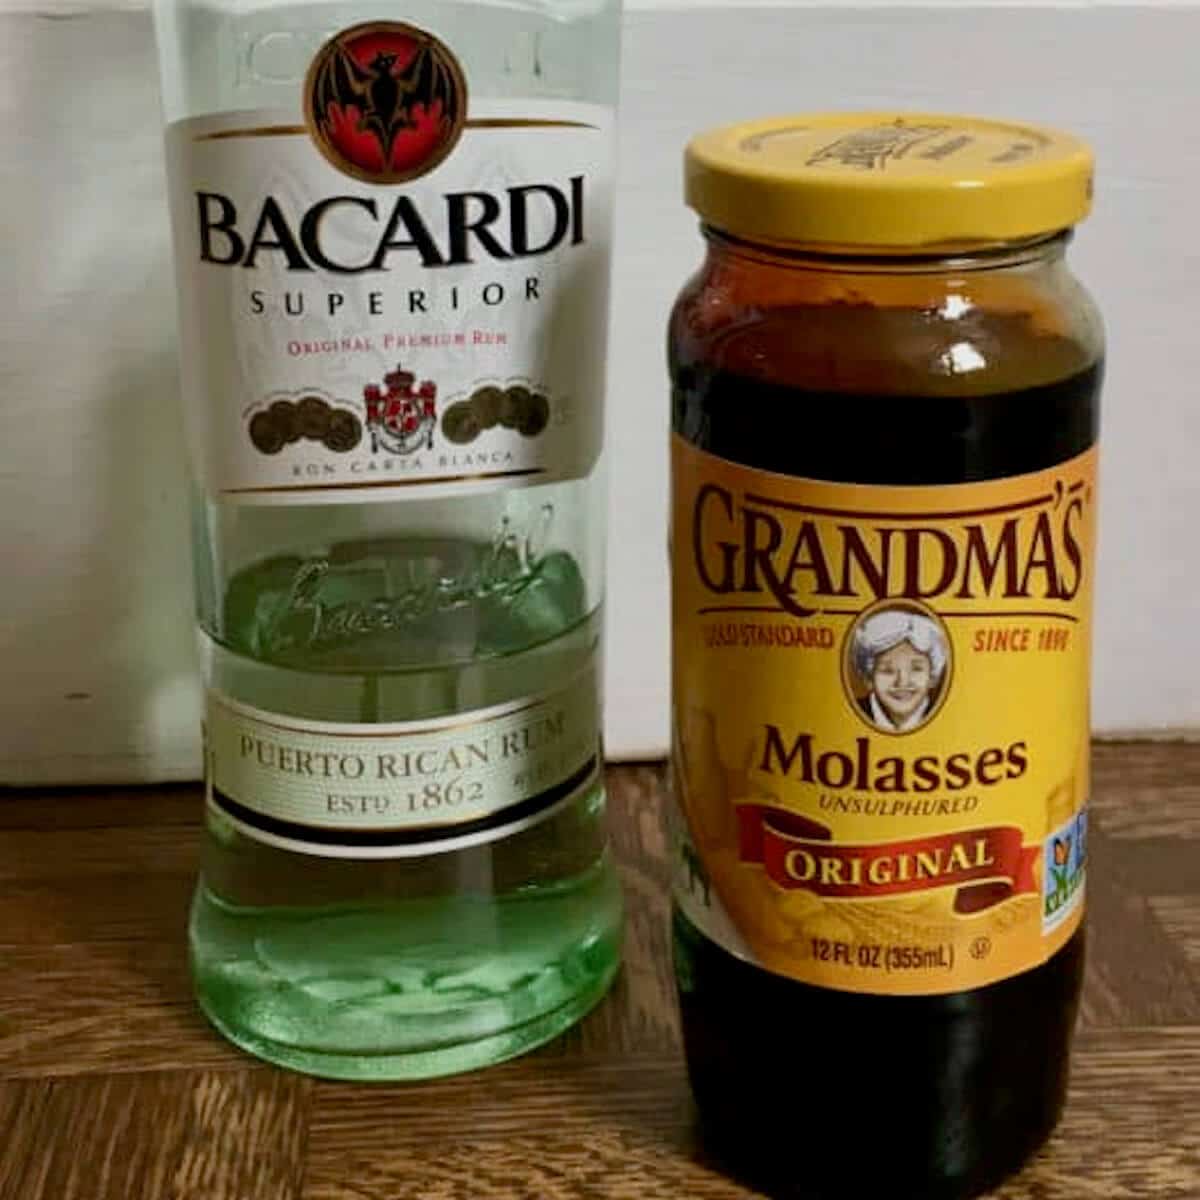 Bacardi Rum bottle and Grandma's Molasses jar on wood tile.